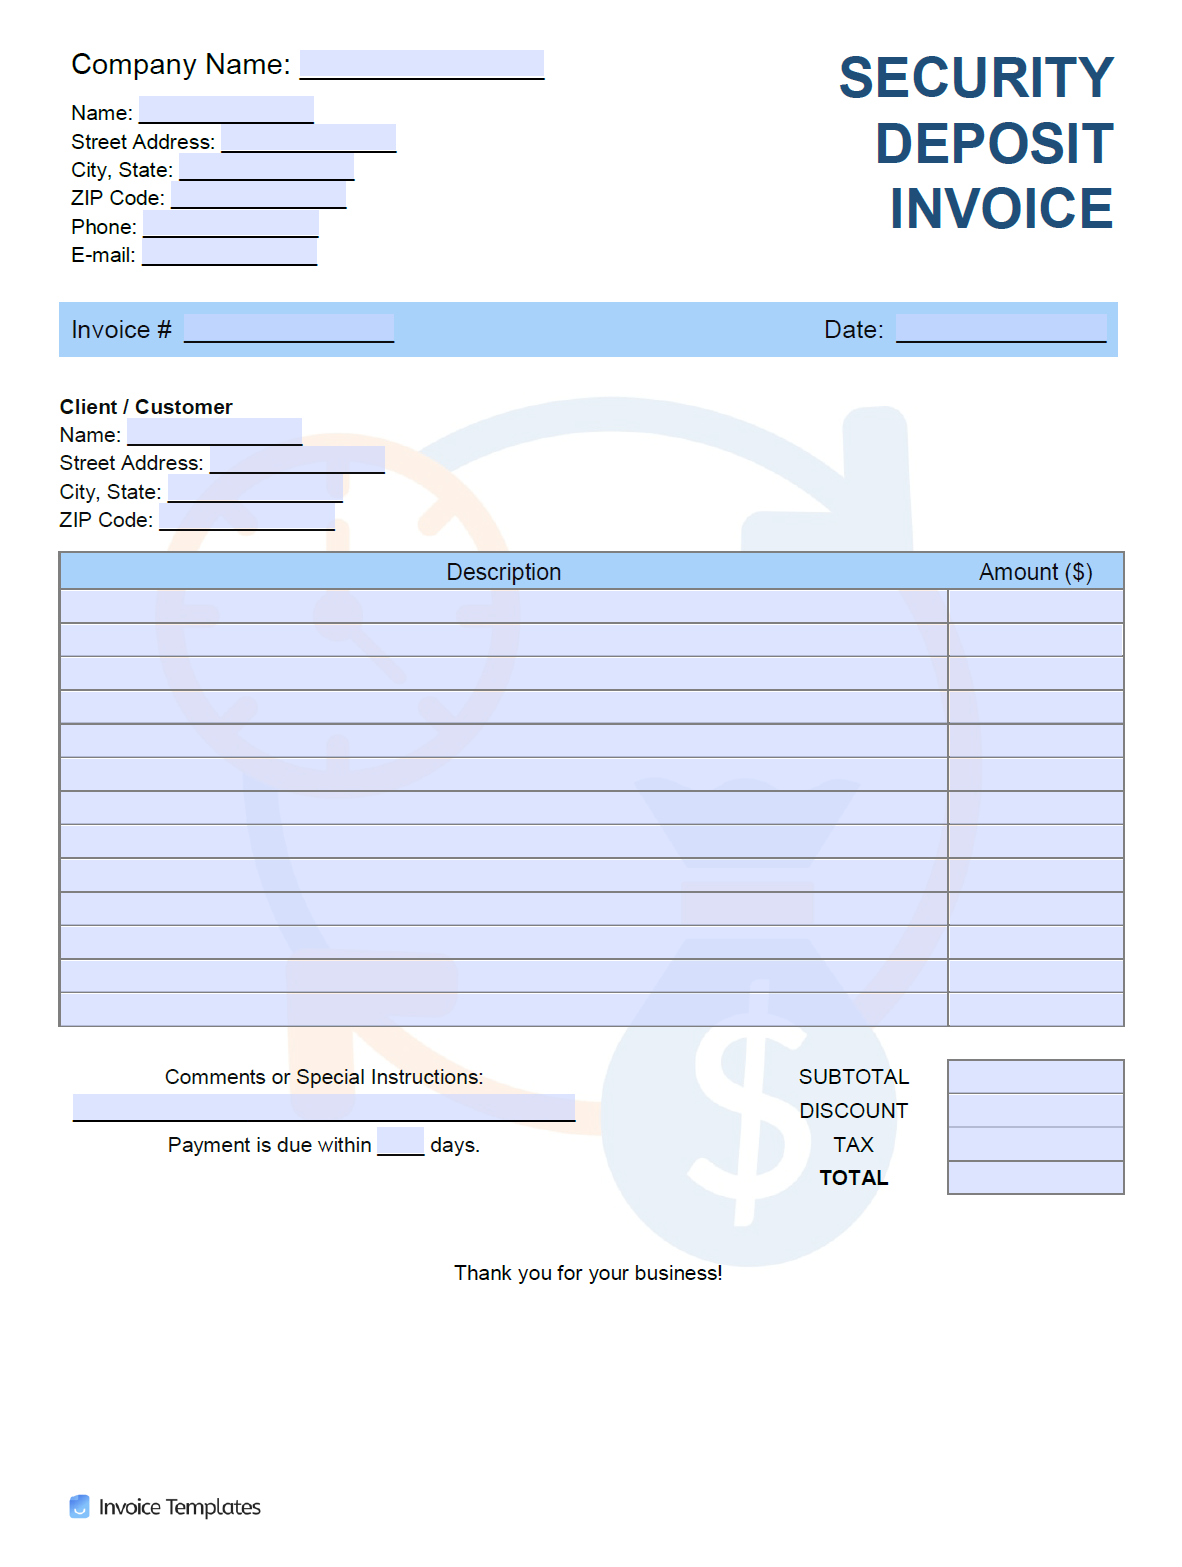 Deposit Invoice Template